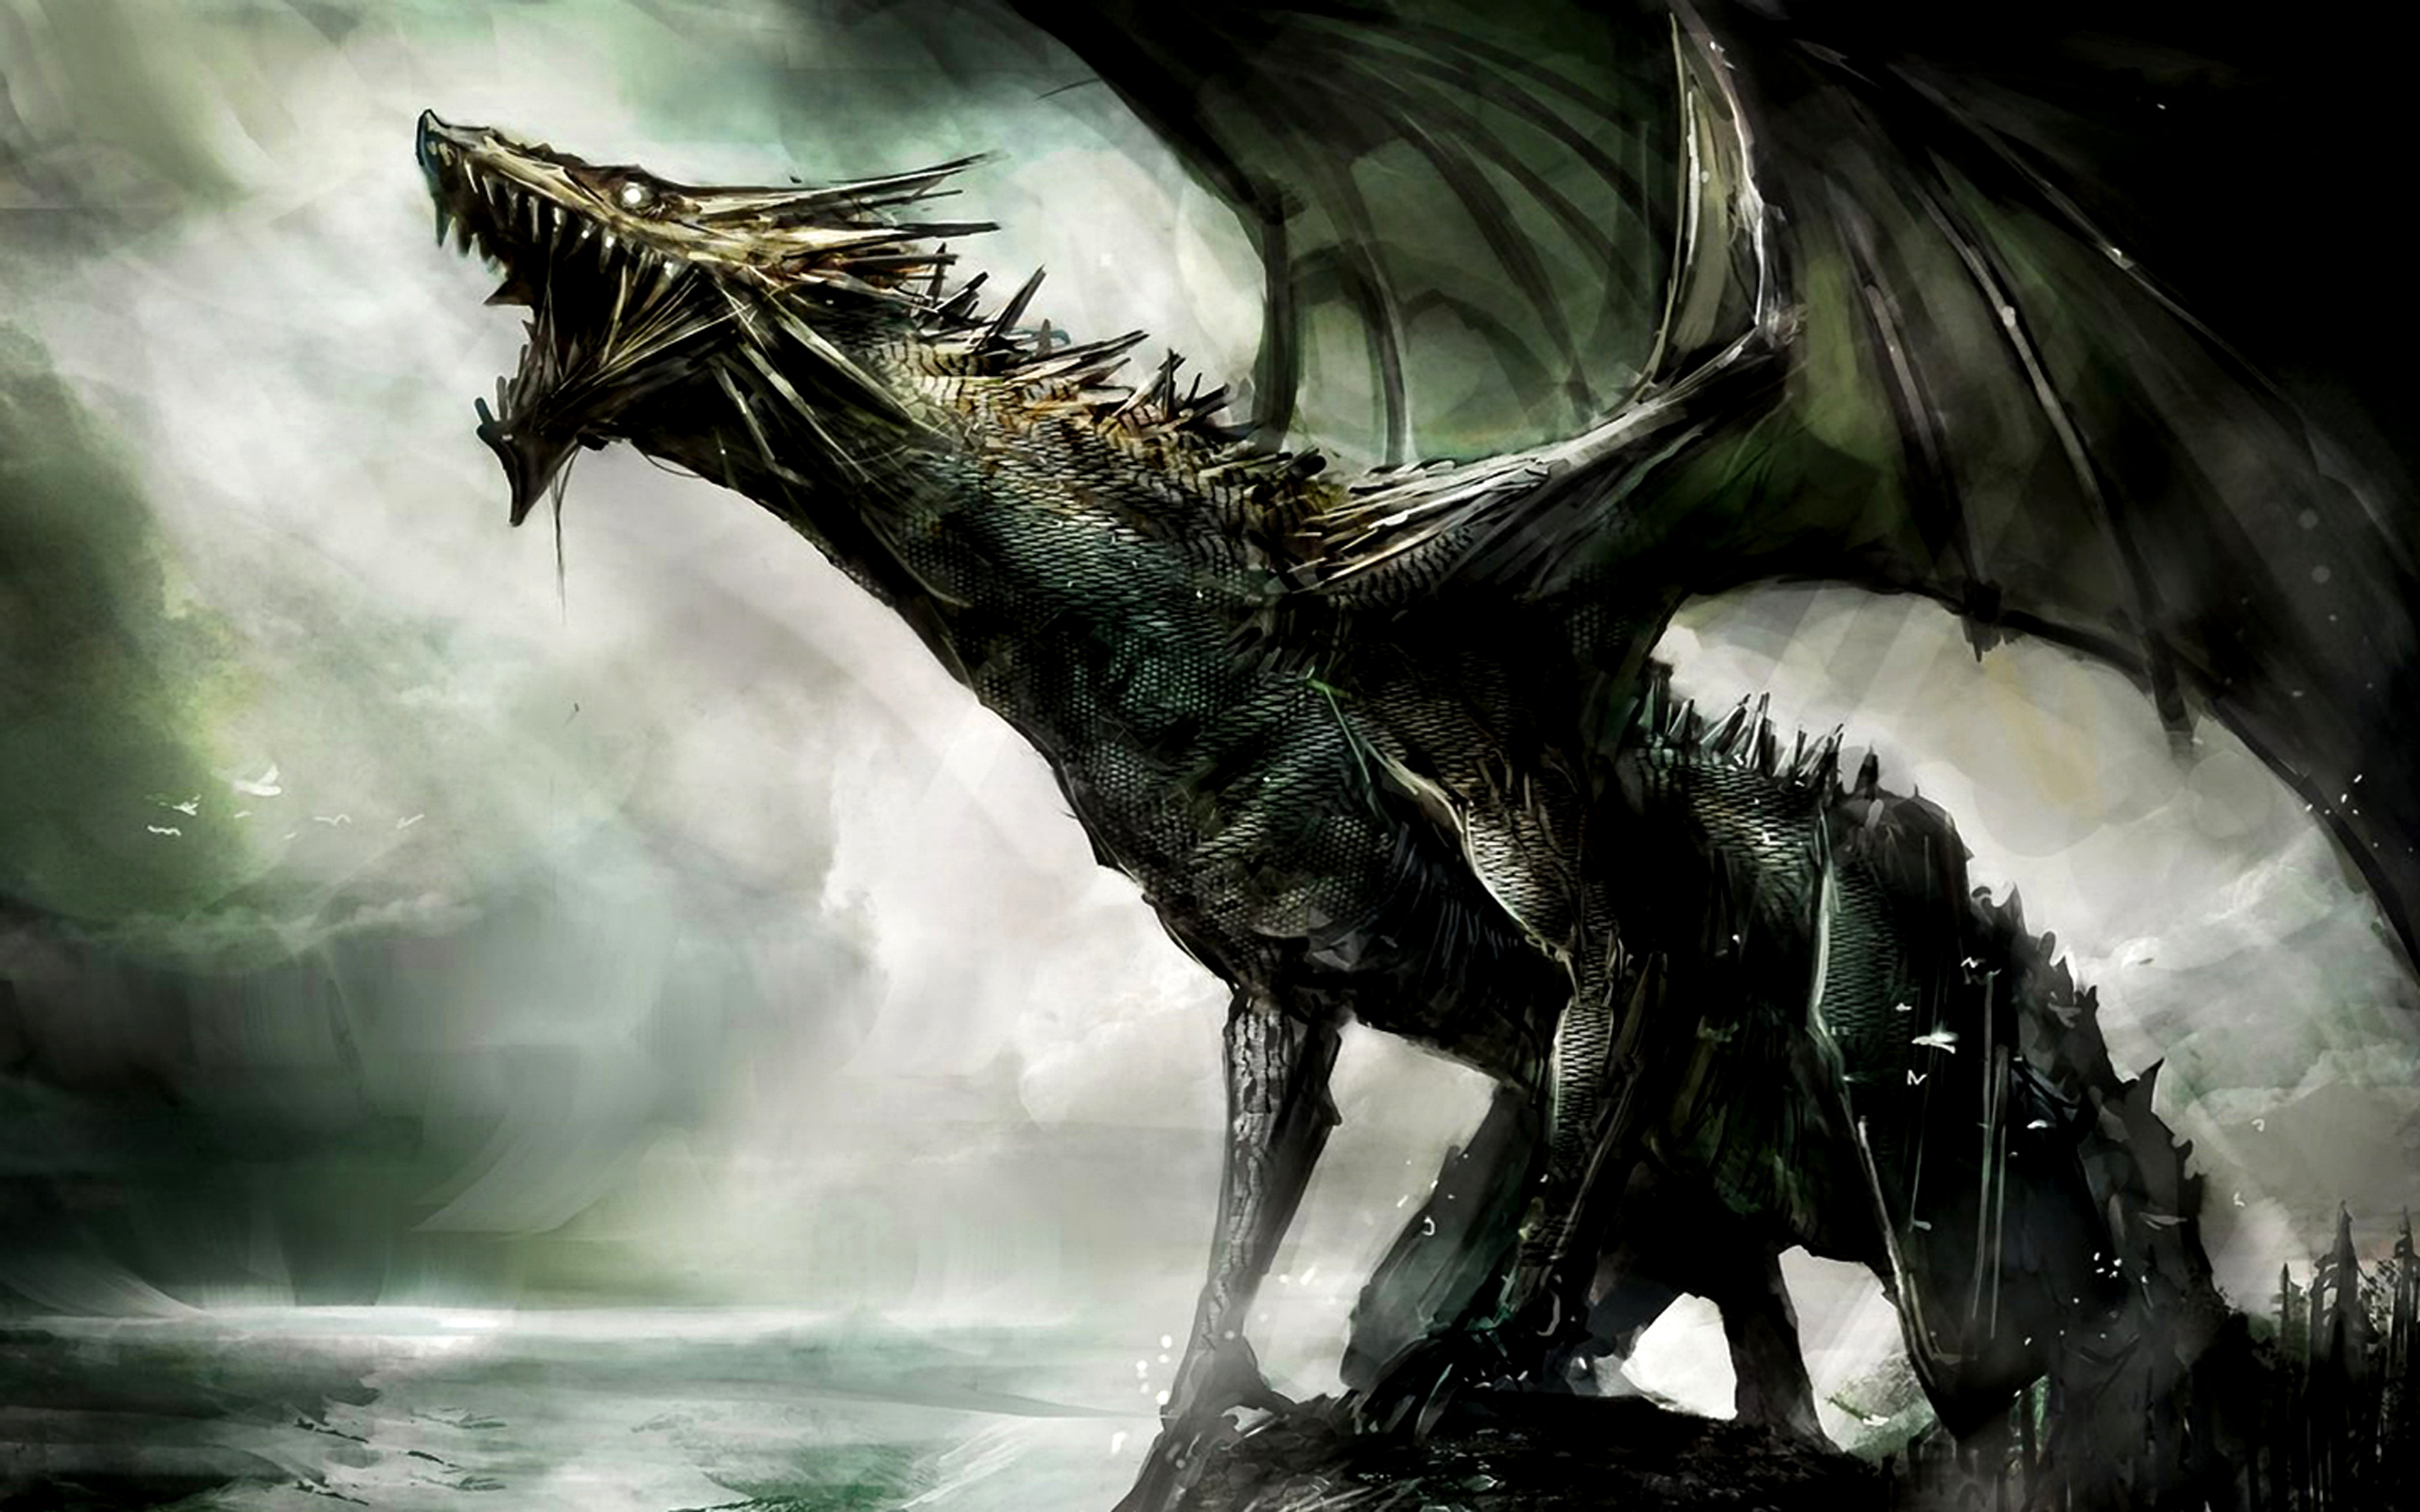 Image result for dragon